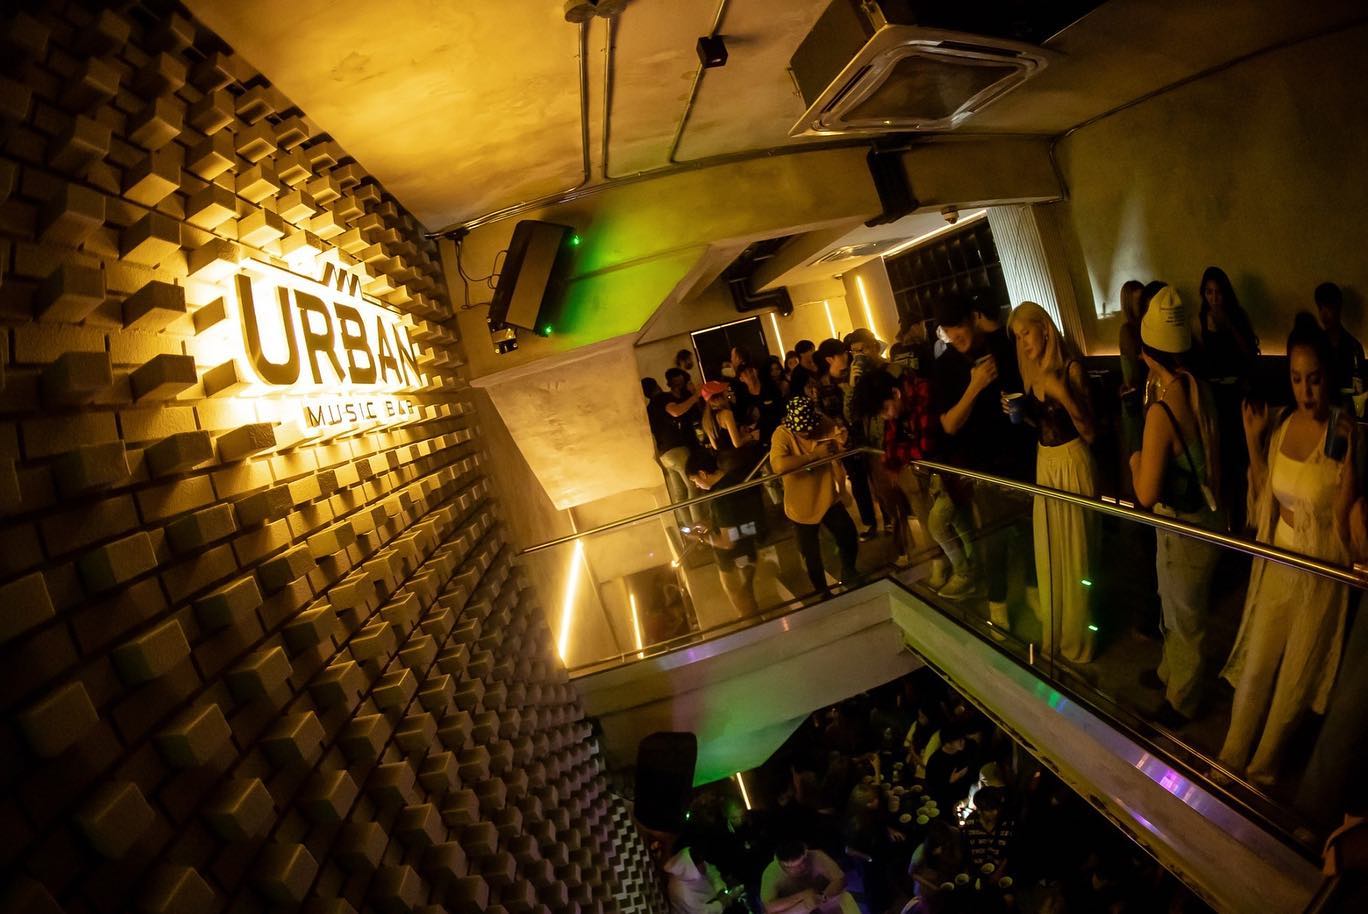 Urban Music Bar (เออร์เบิ้น มิวสิค บาร์) : Bangkok (กรุงเทพมหานคร)